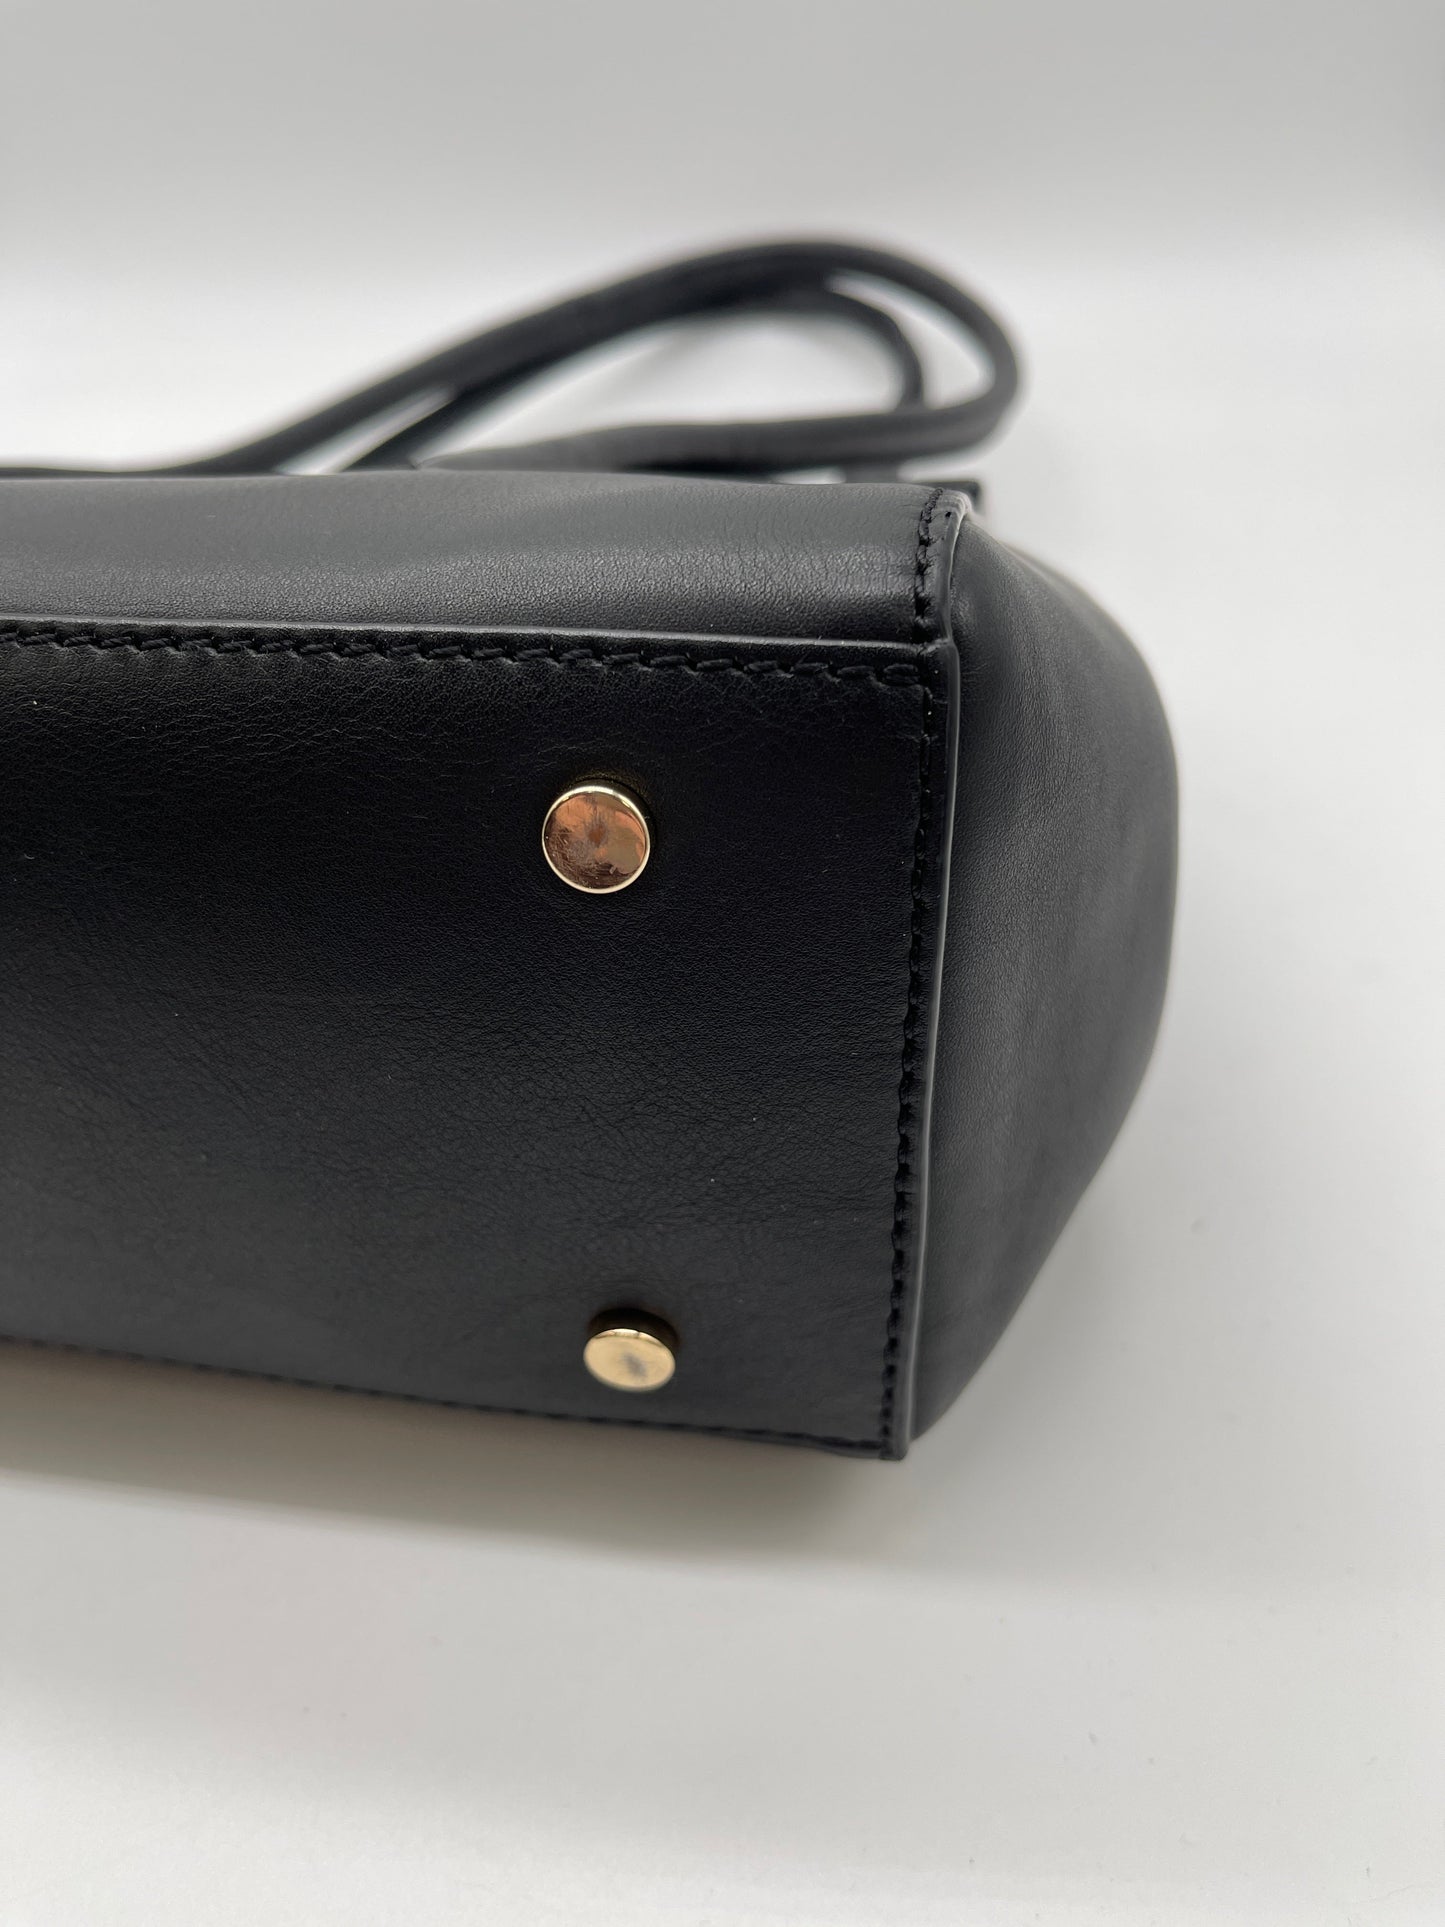 Handbag Designer By Radley London  Size: Medium